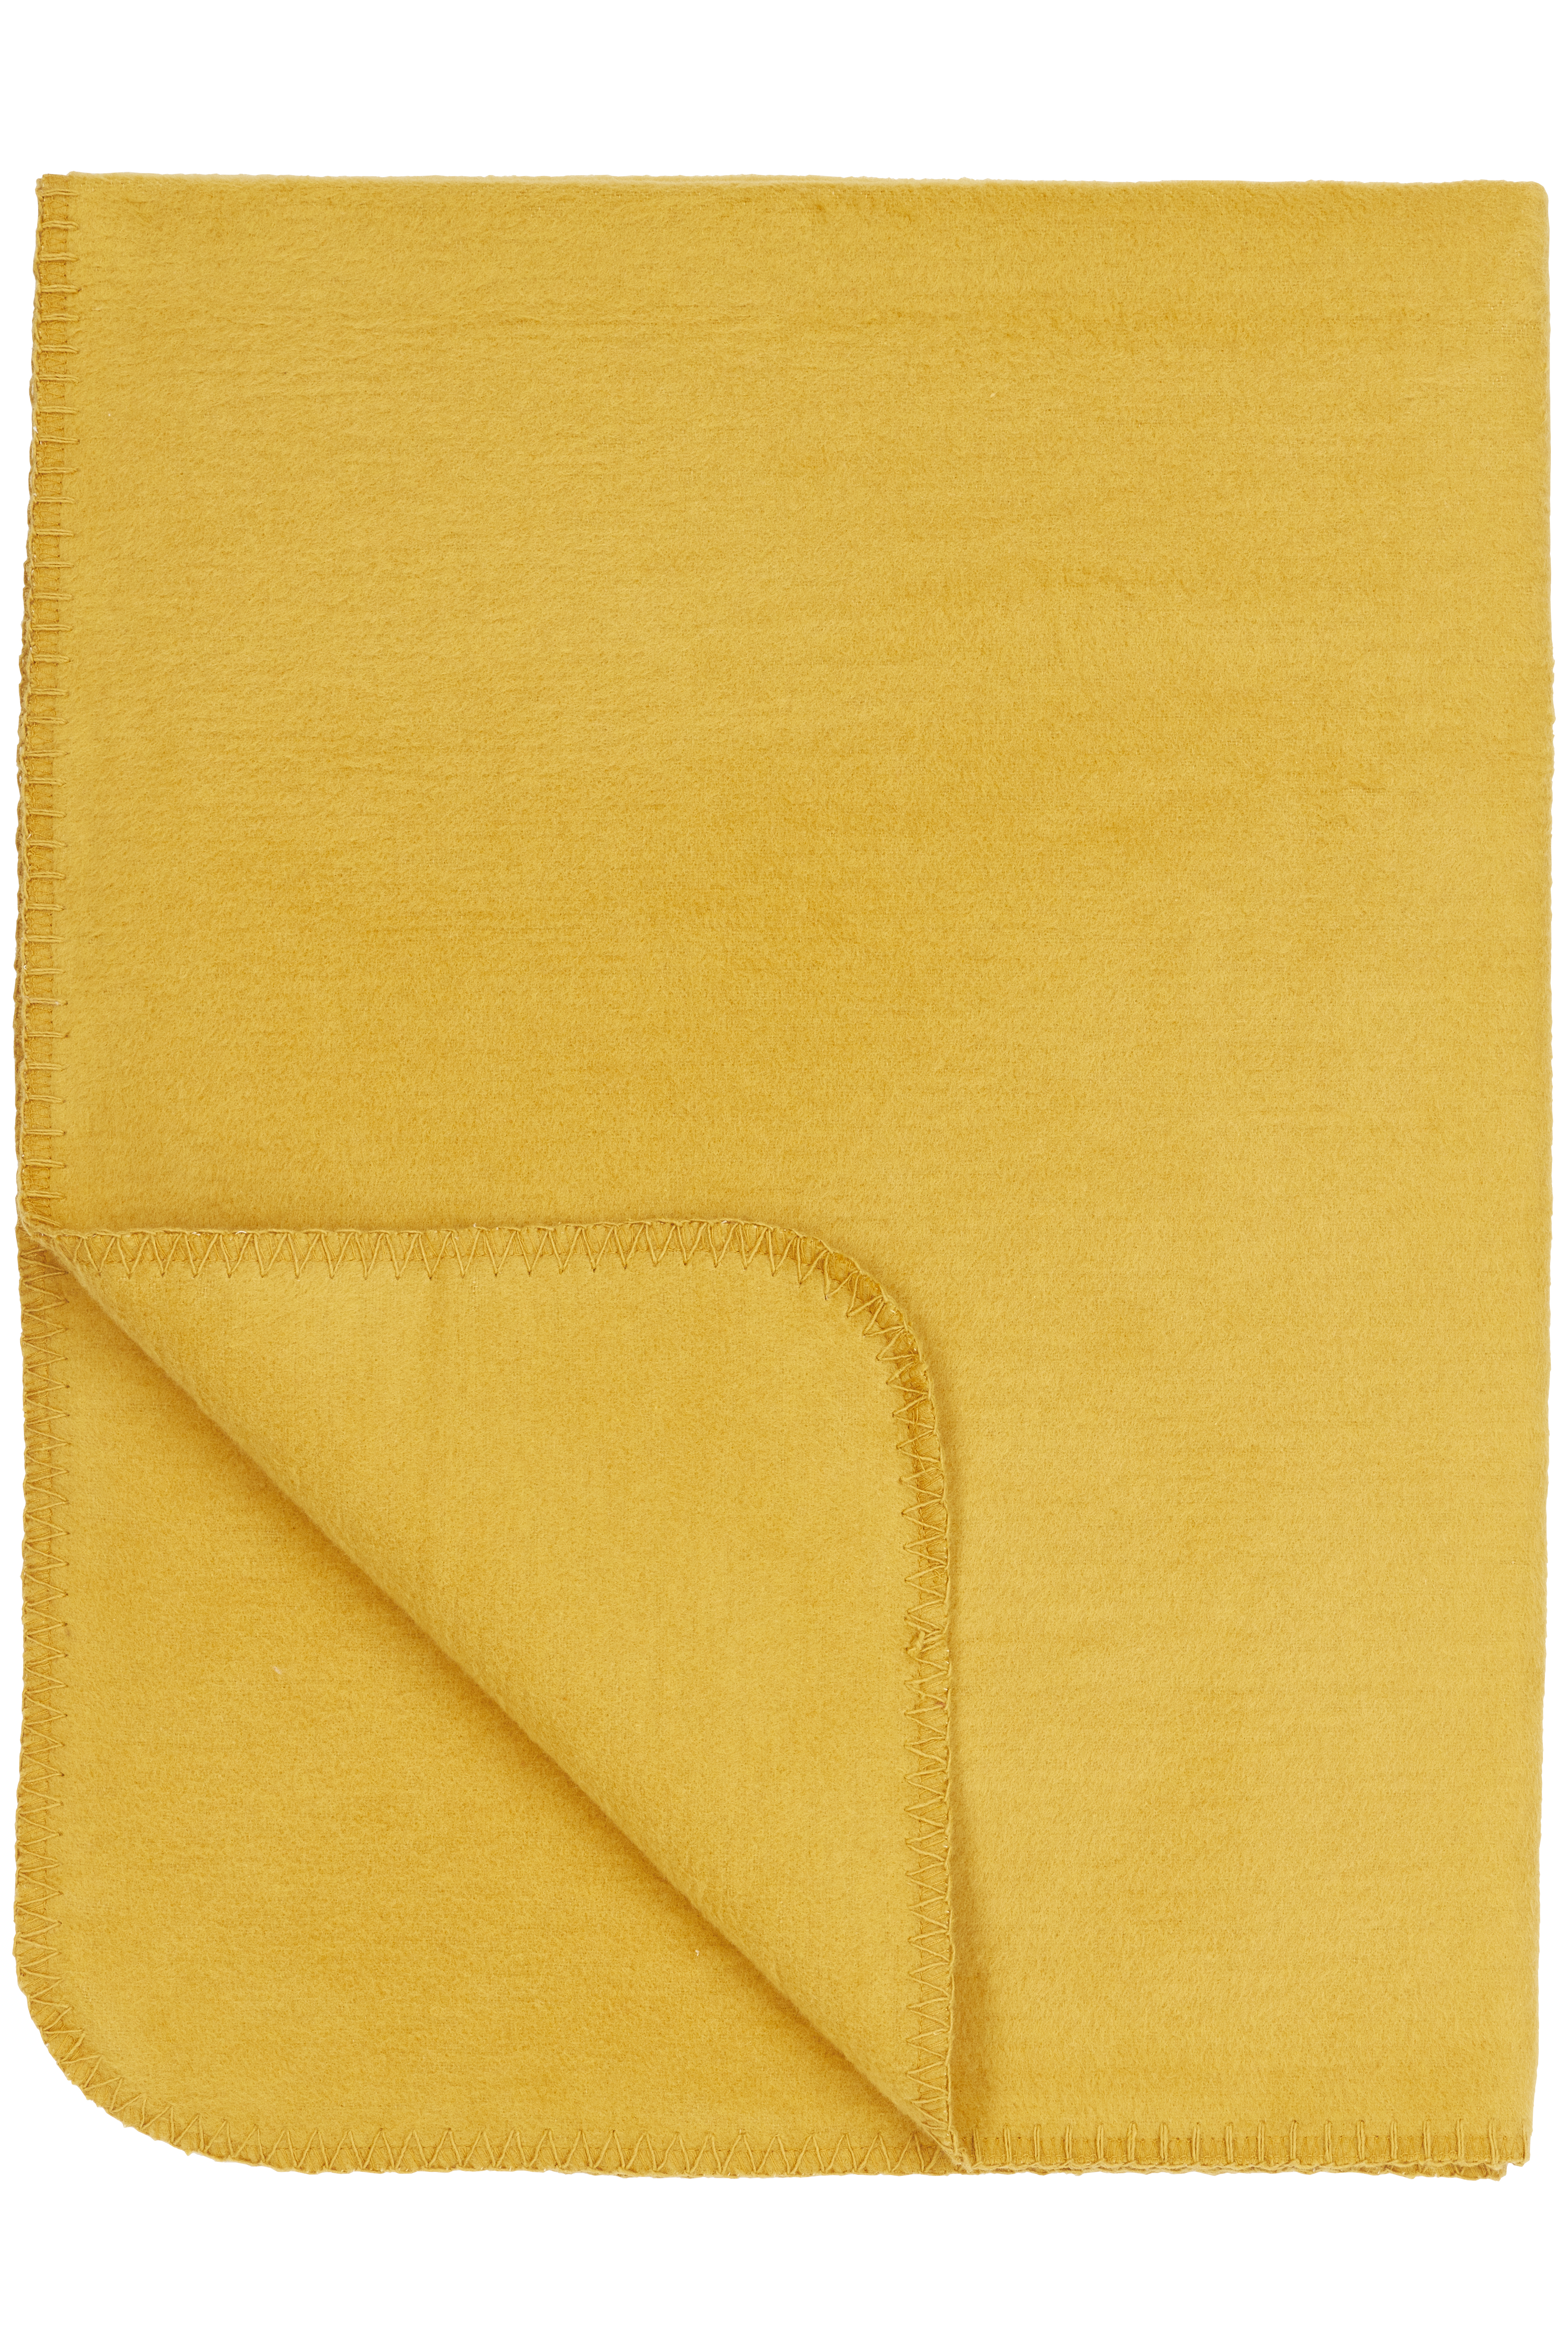 Ledikant deken Uni - honey gold - 100x150cm